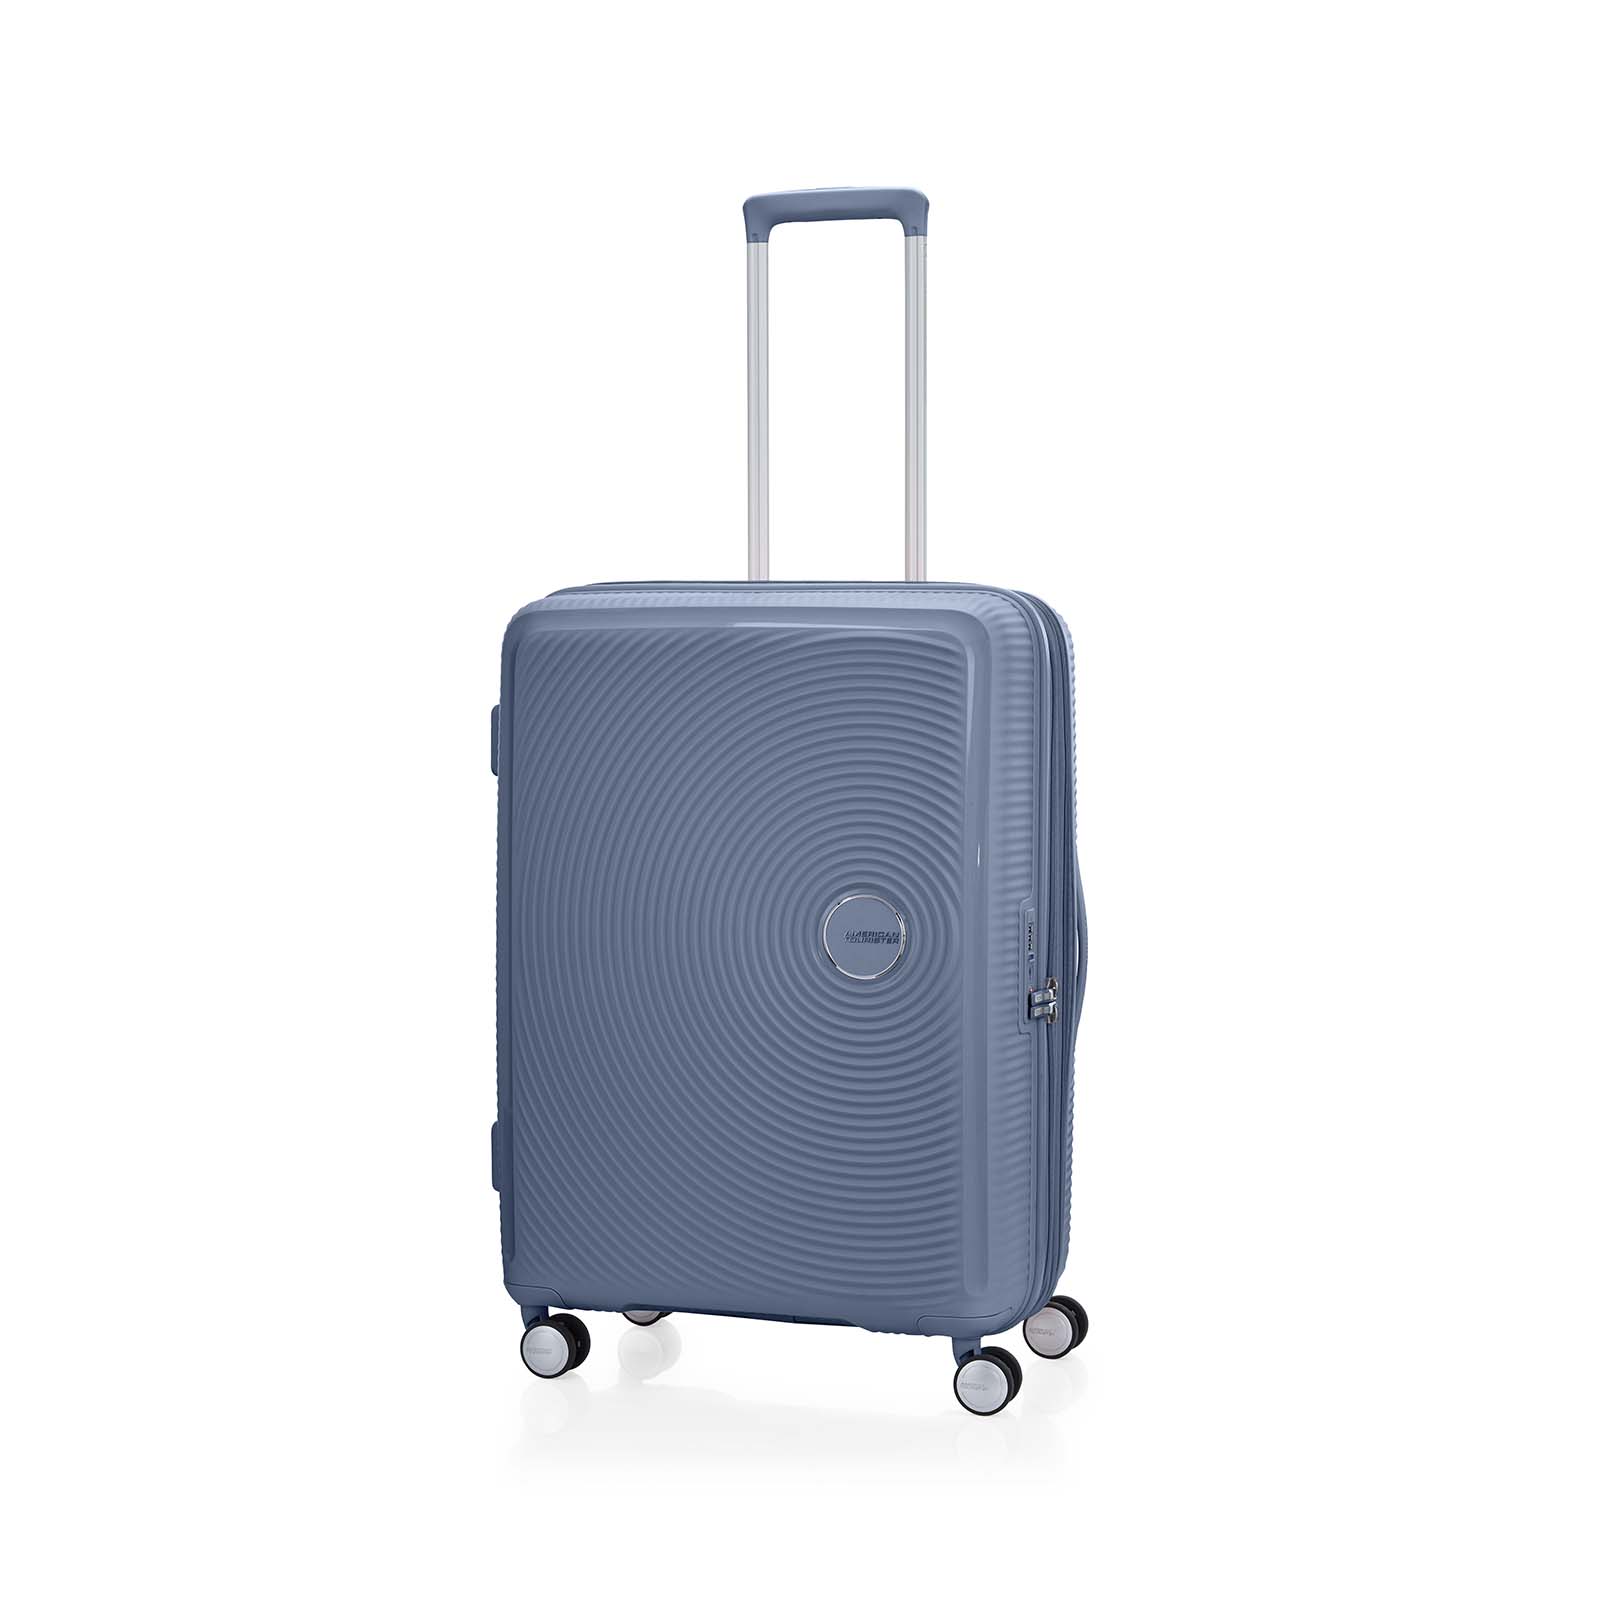 American-Tourister-Curio-2-69cm-Suitcase-Stone-Blue-Angle